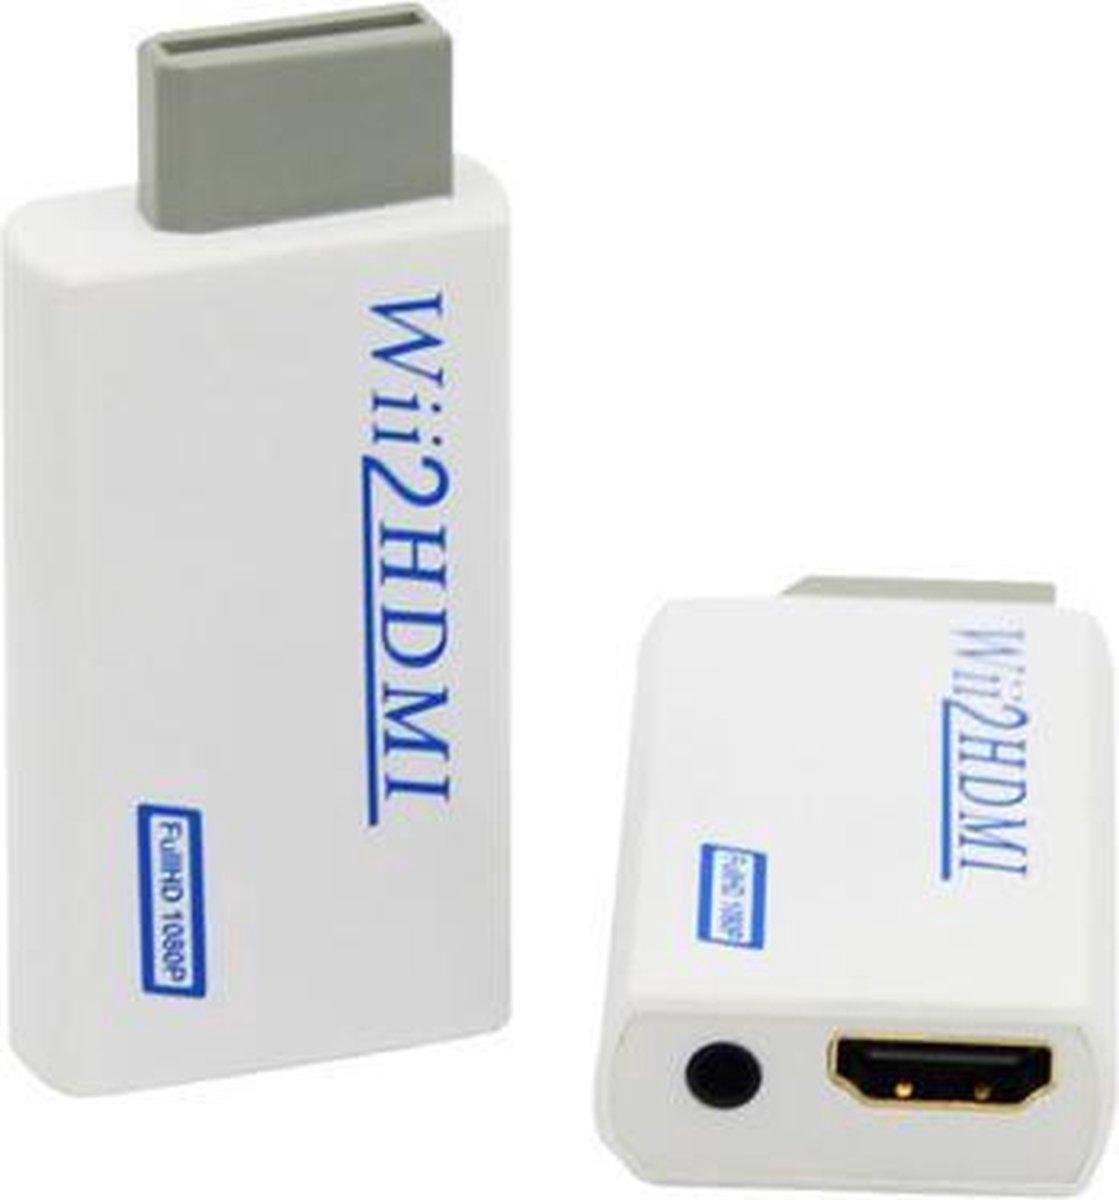 Garpex® Wii HDMI adaptateur Wii HDMI 1080P / 720P adaptateur